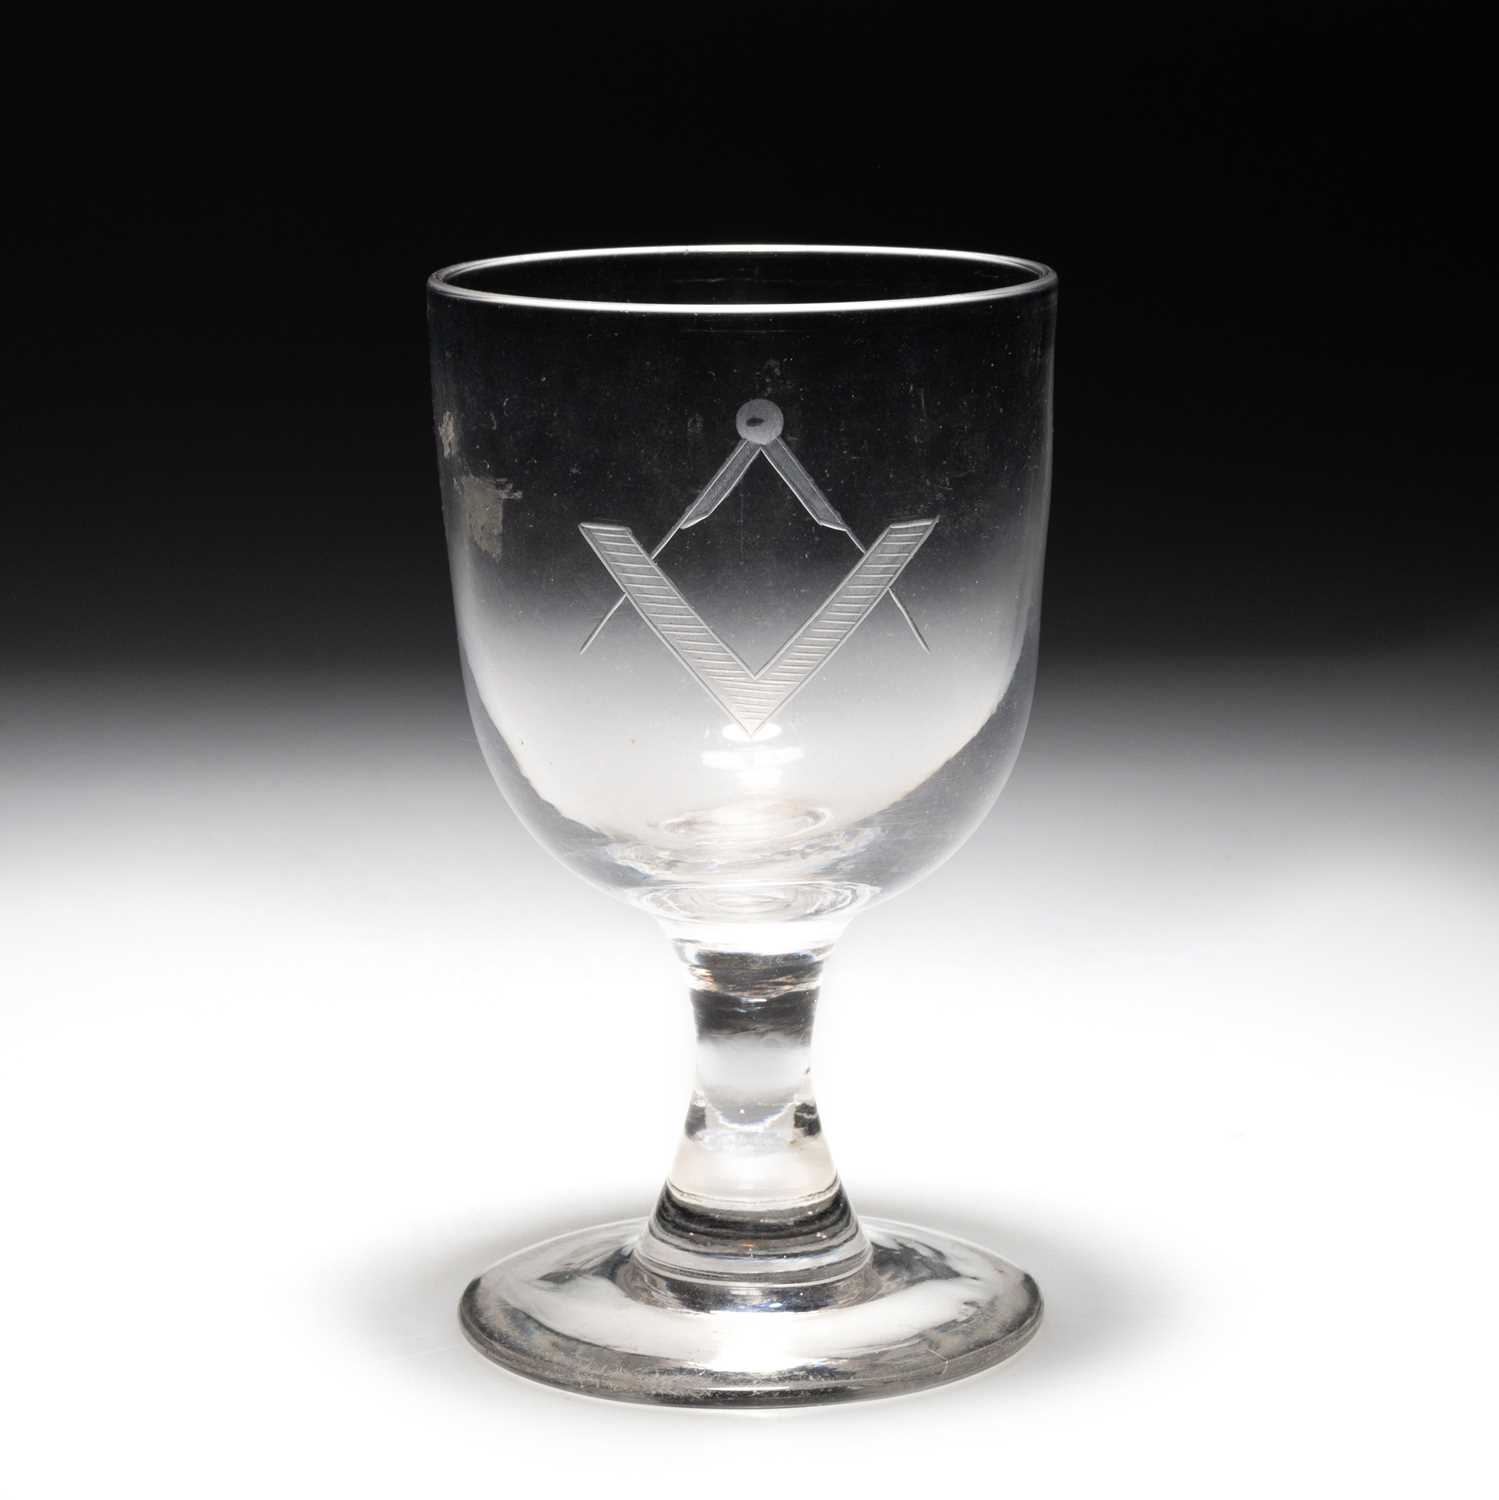 Lot 14 - MASONIC INTEREST: A GLASS RUMMER, EARLY 19TH CENTURY